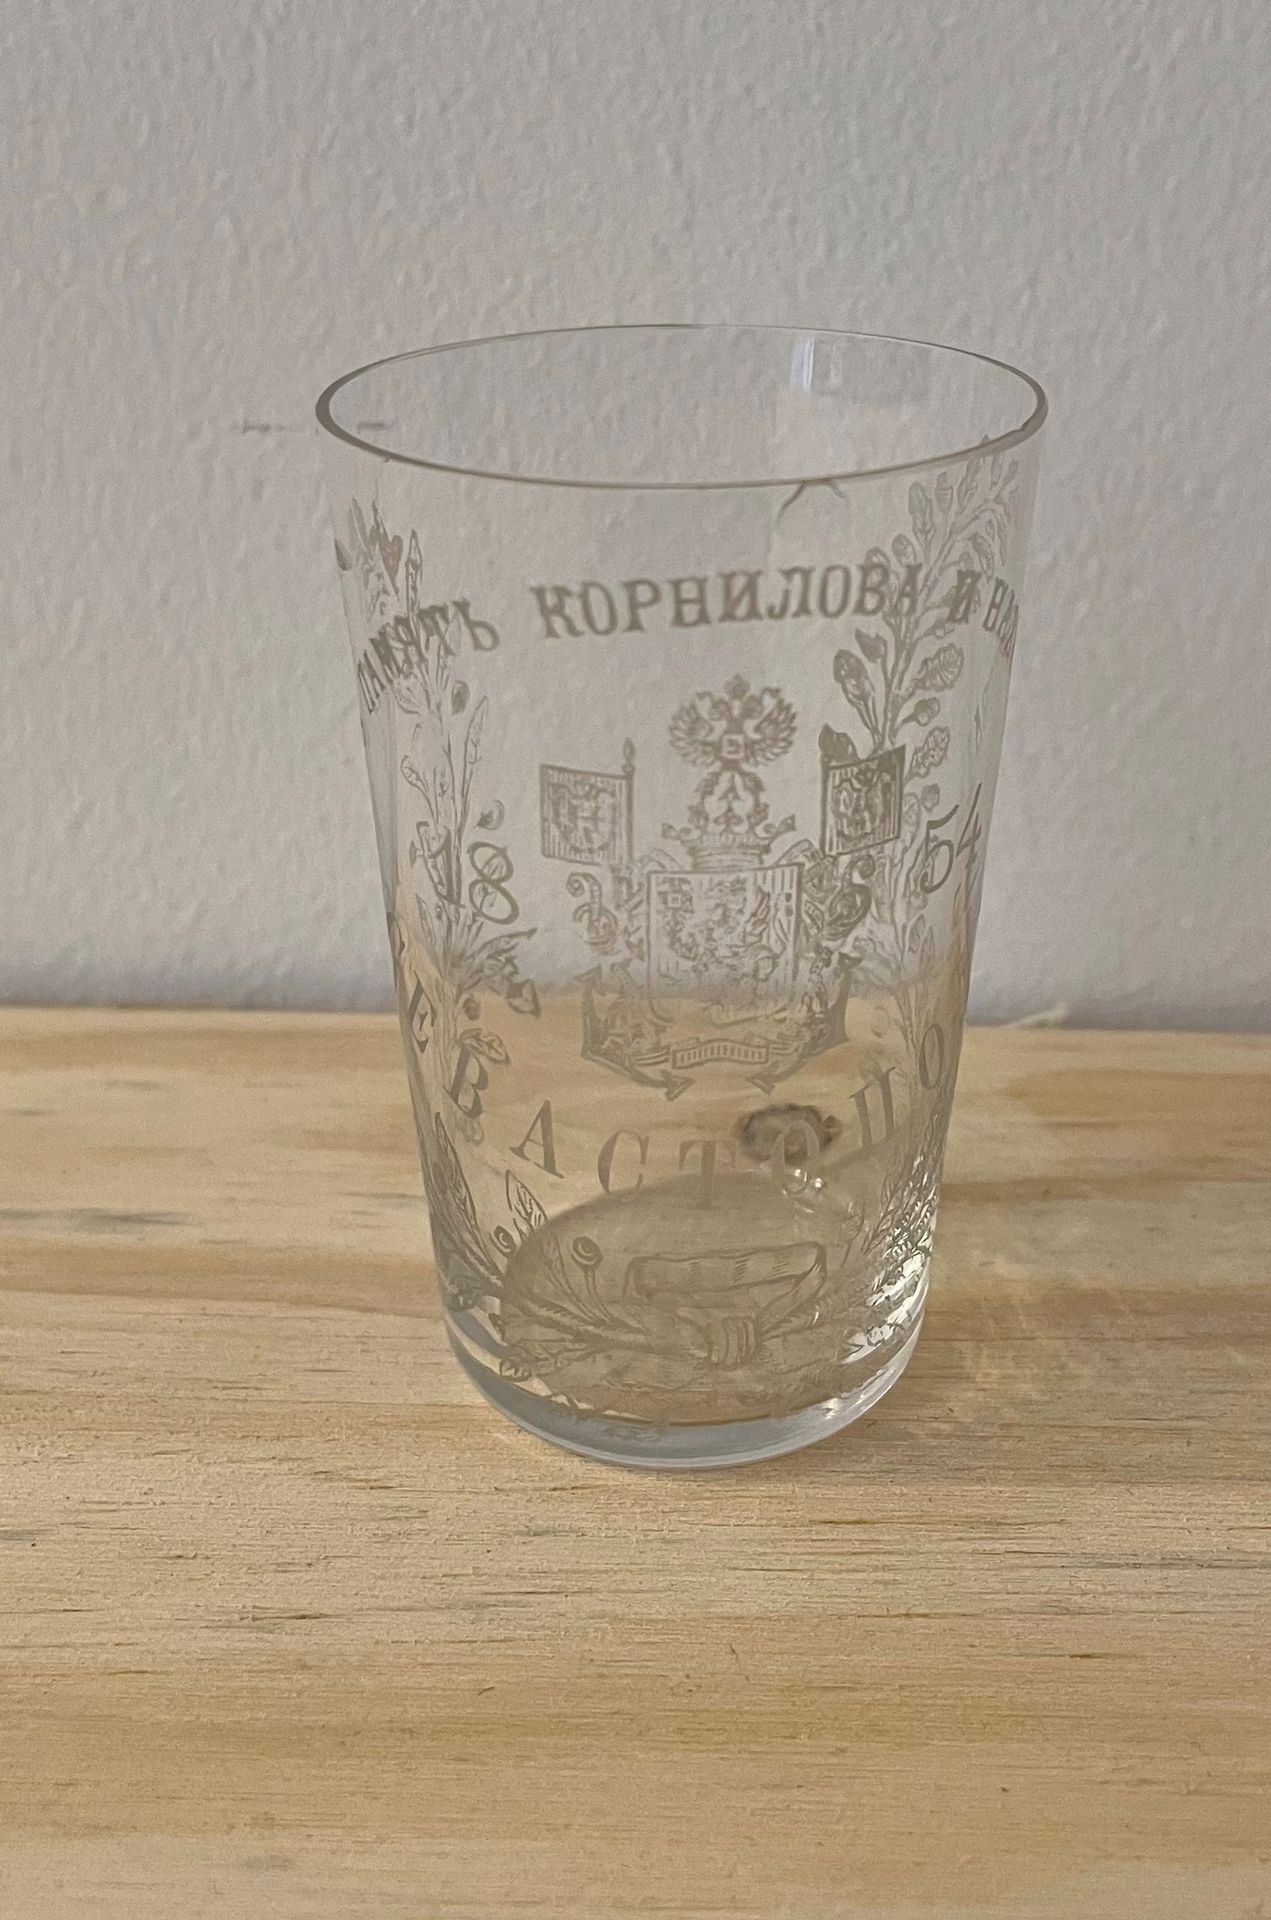 Null Petit verre en cristal gravé d'un blason, inscription en cyrillique, guirla&hellip;